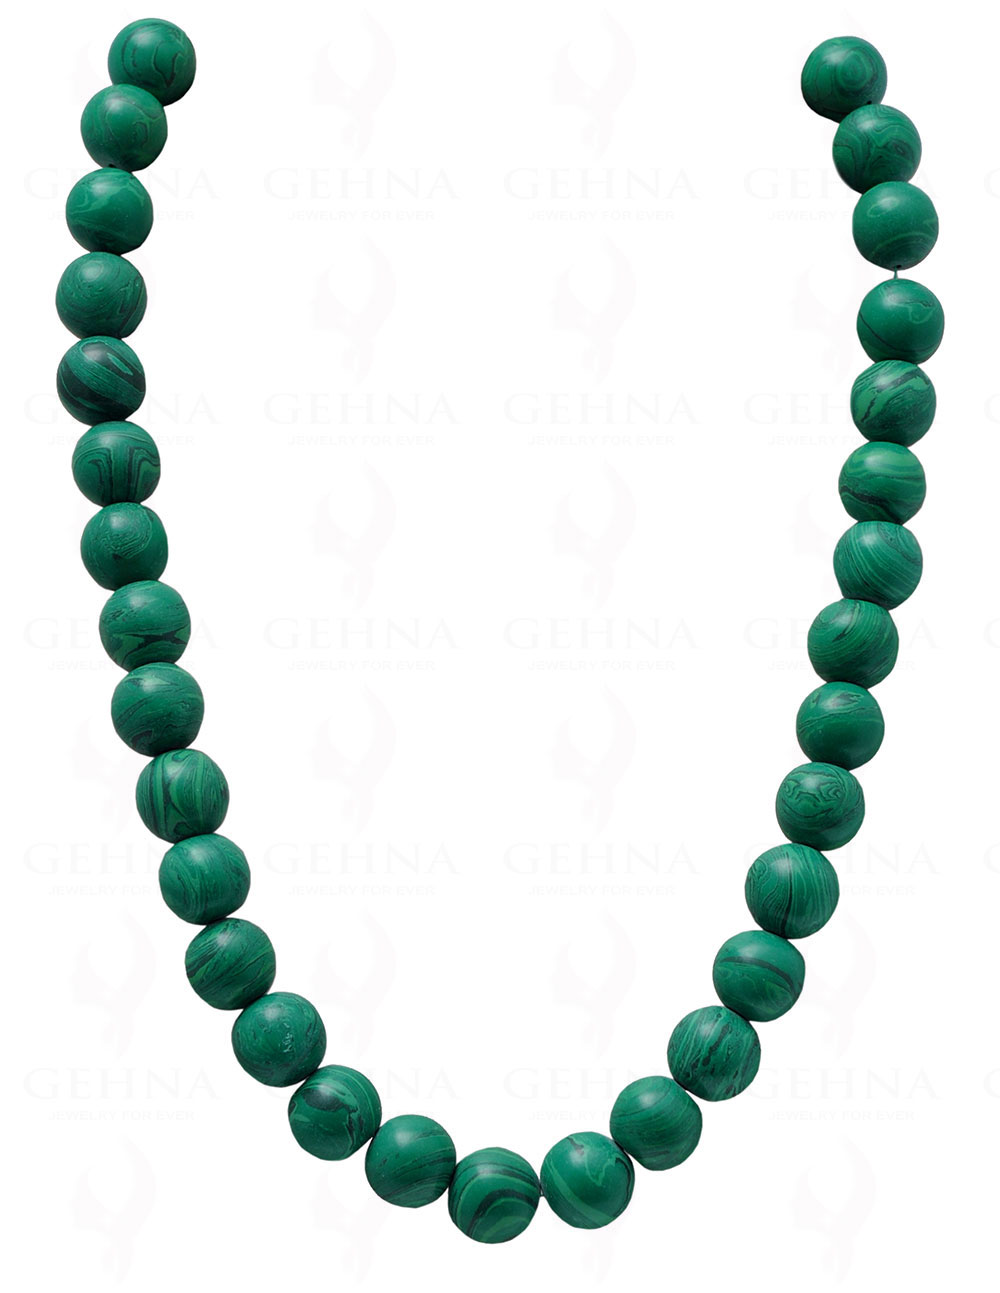 Malachite Gemstone Cabochon Round Ball Bead Necklace NS-1180